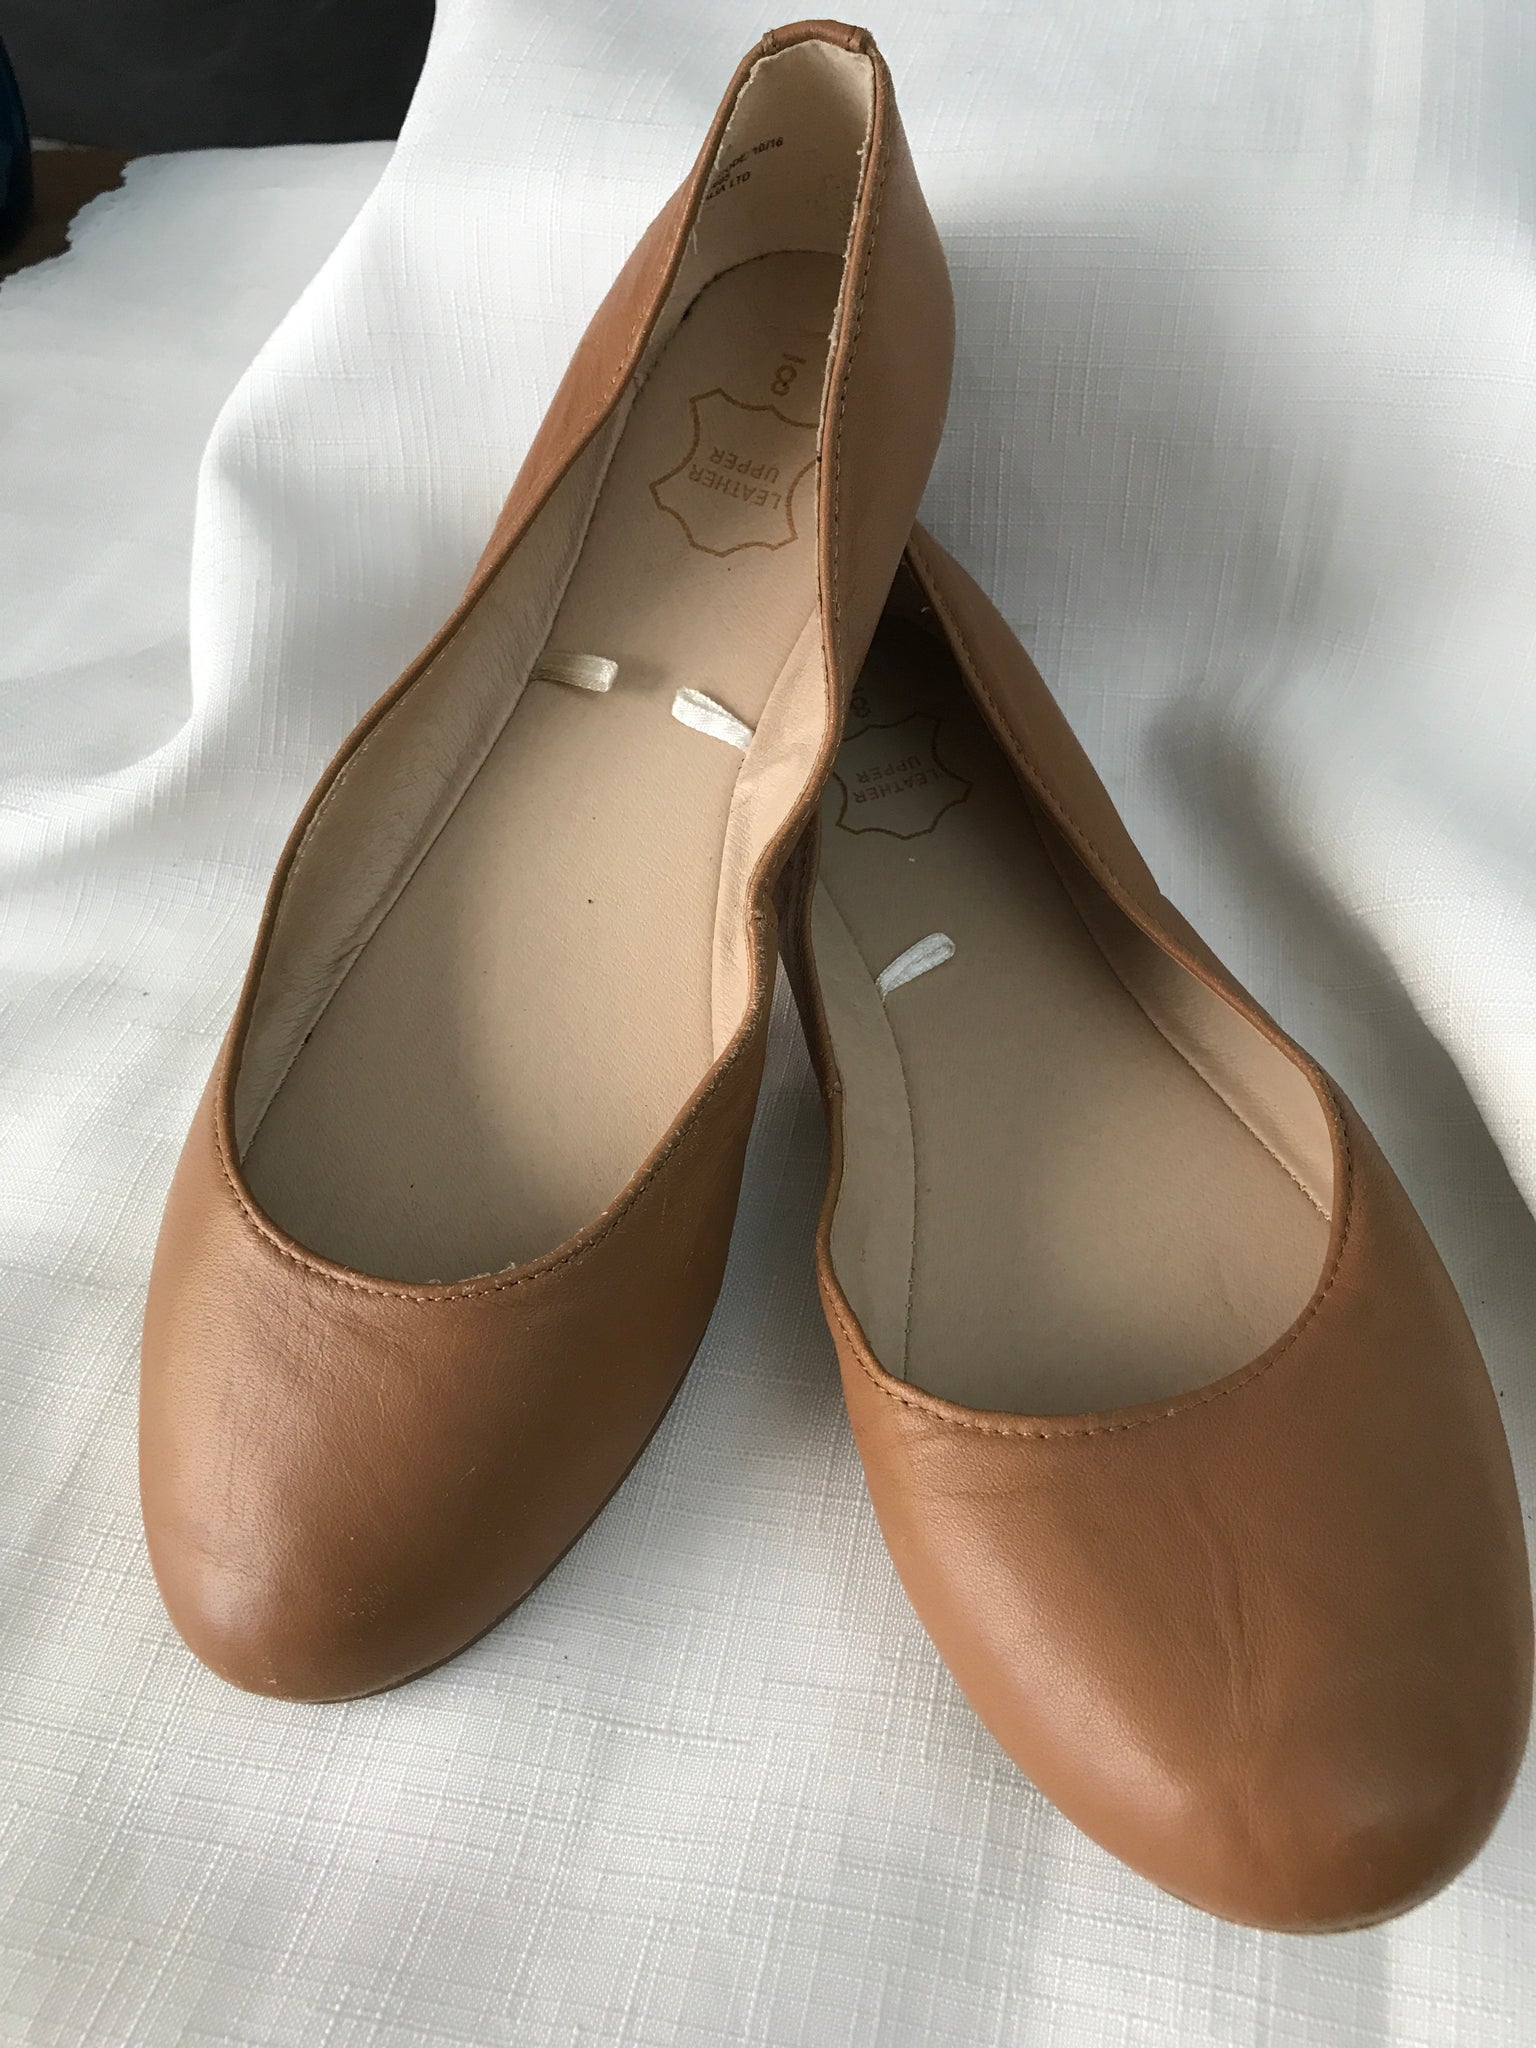 ballerina shoes kmart